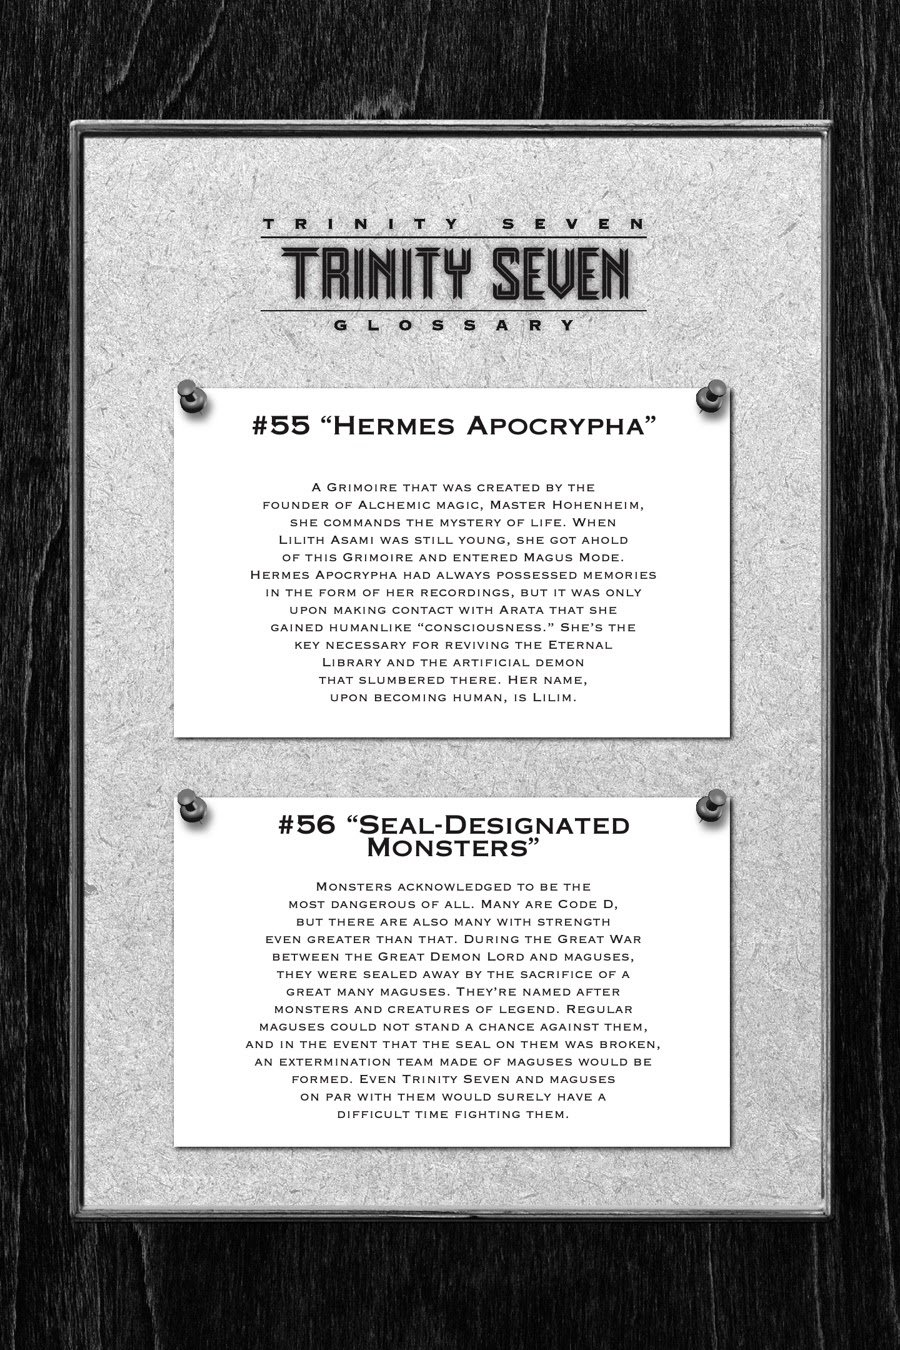 Trinity Seven Chapter 82